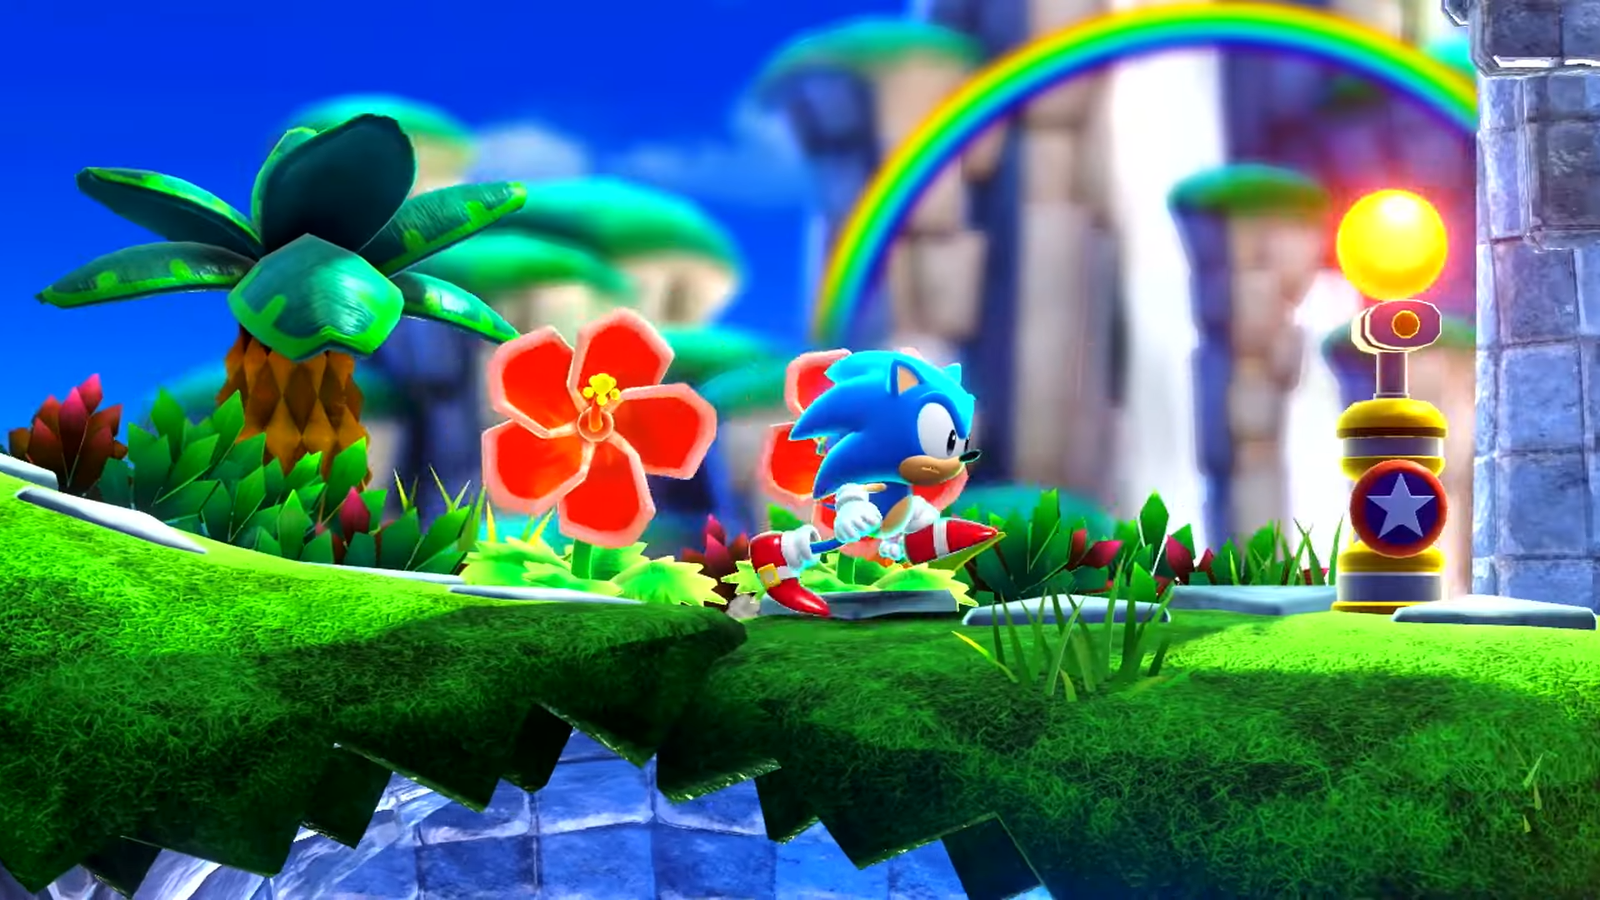 Sonic Superstars – LEGO® Sonic Skin grátis - Epic Games Store